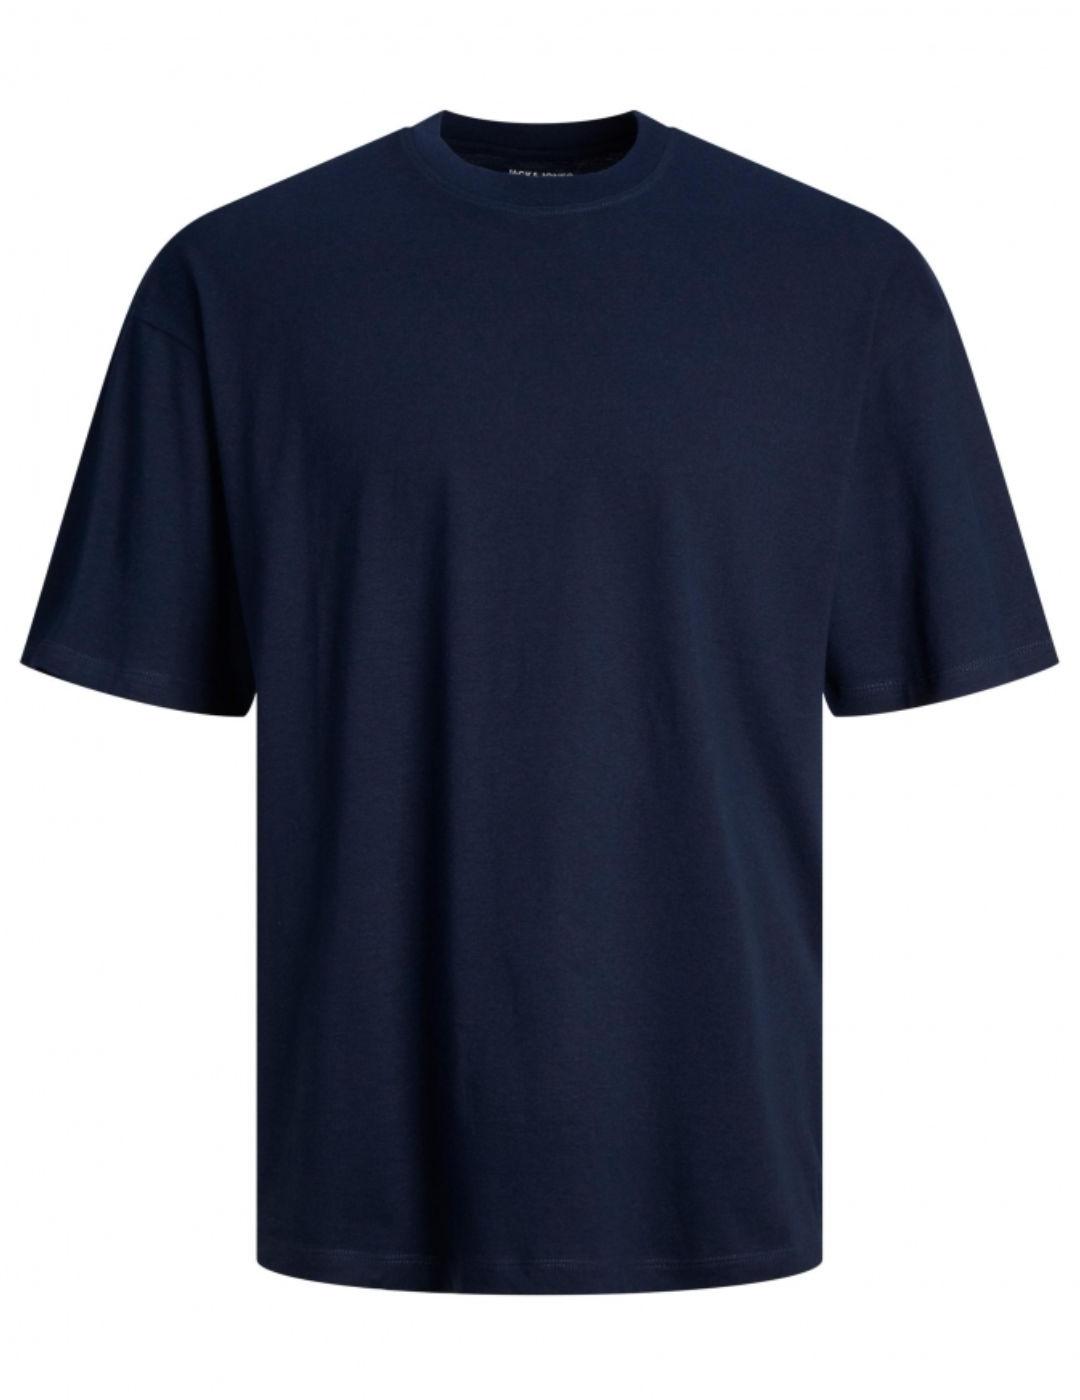 Camiseta Jack&Jones Brandley marino manga corta para hombre